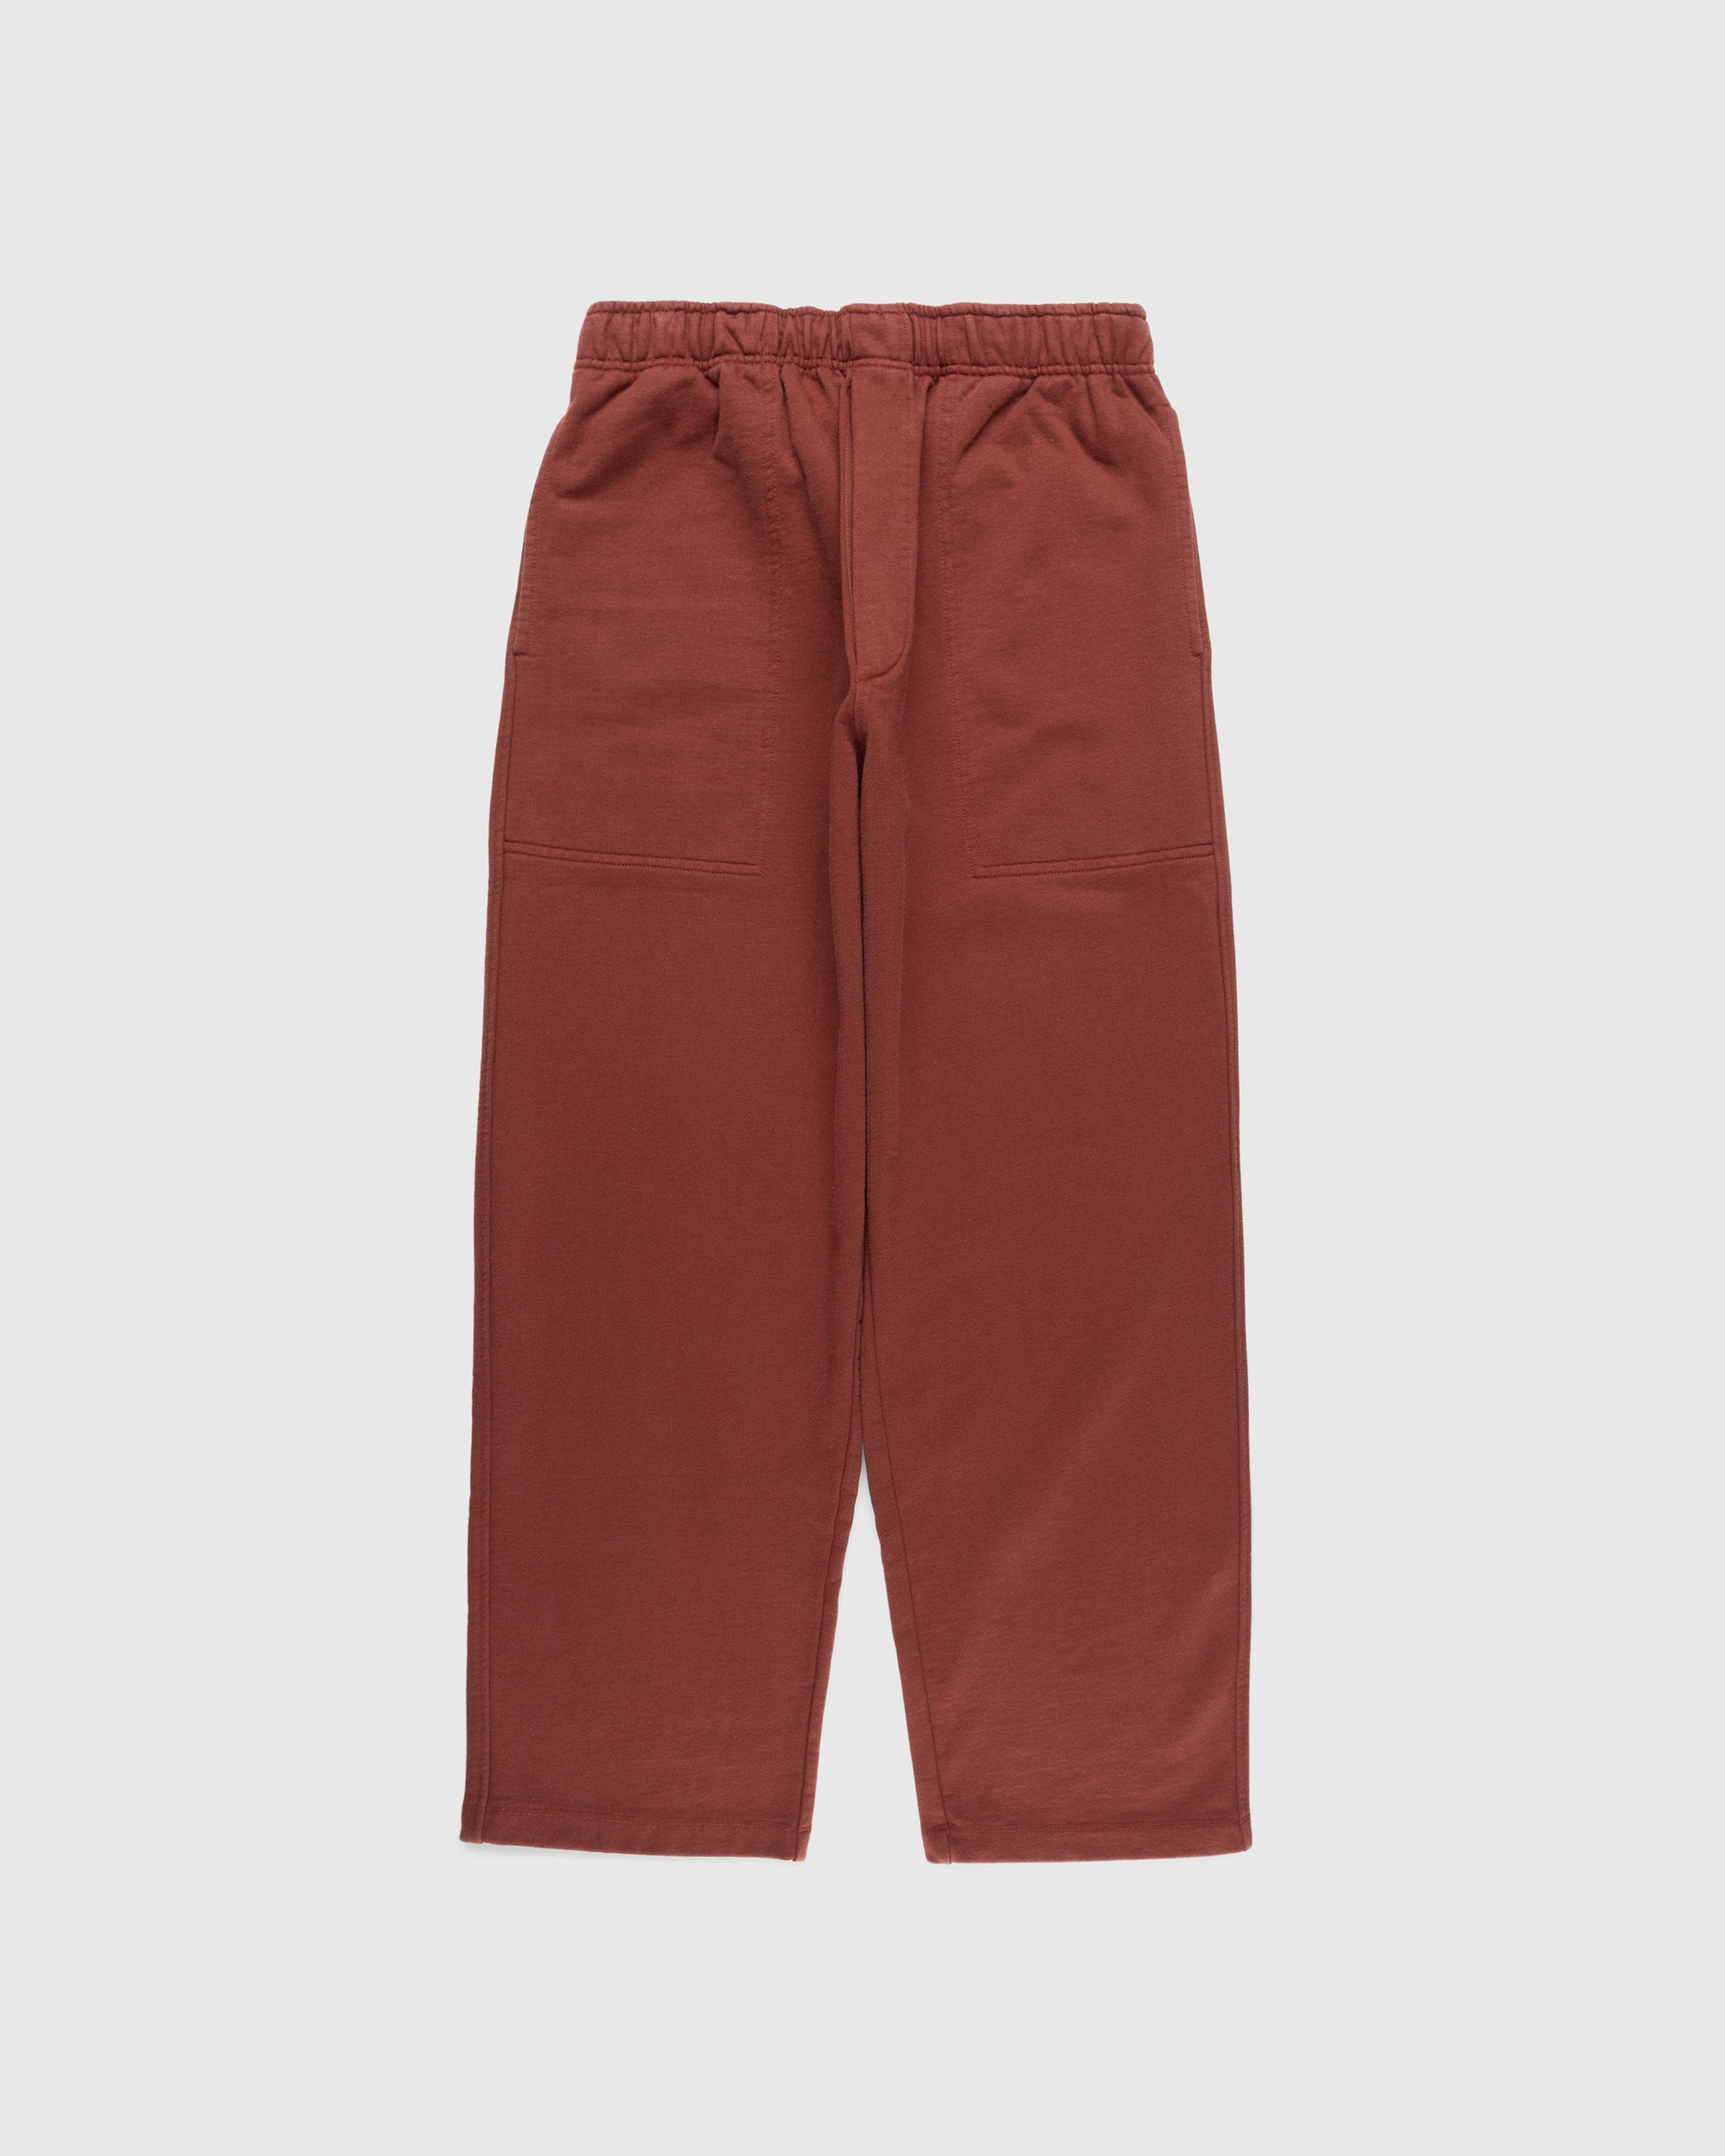 Bode - Sweatpant - Clothing - Brown - Image 1